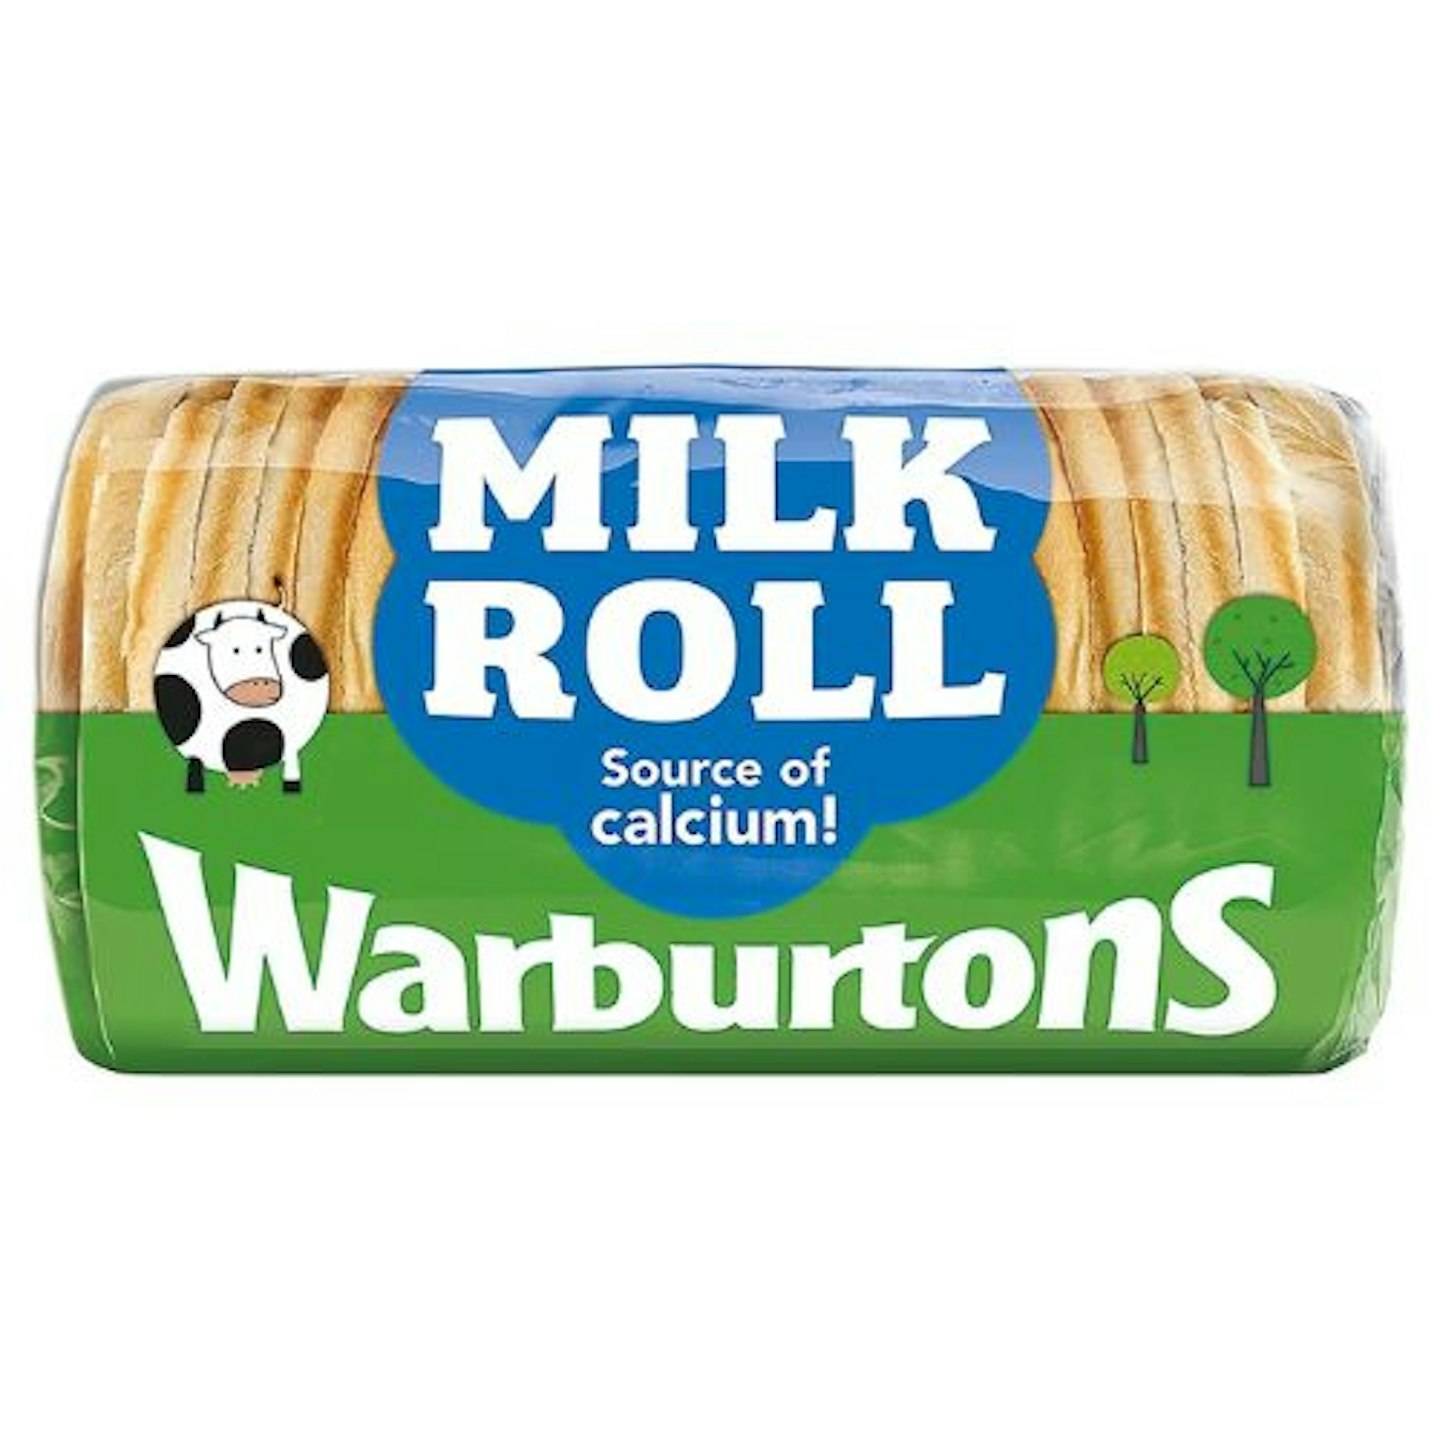 Warburtons Milk Roll